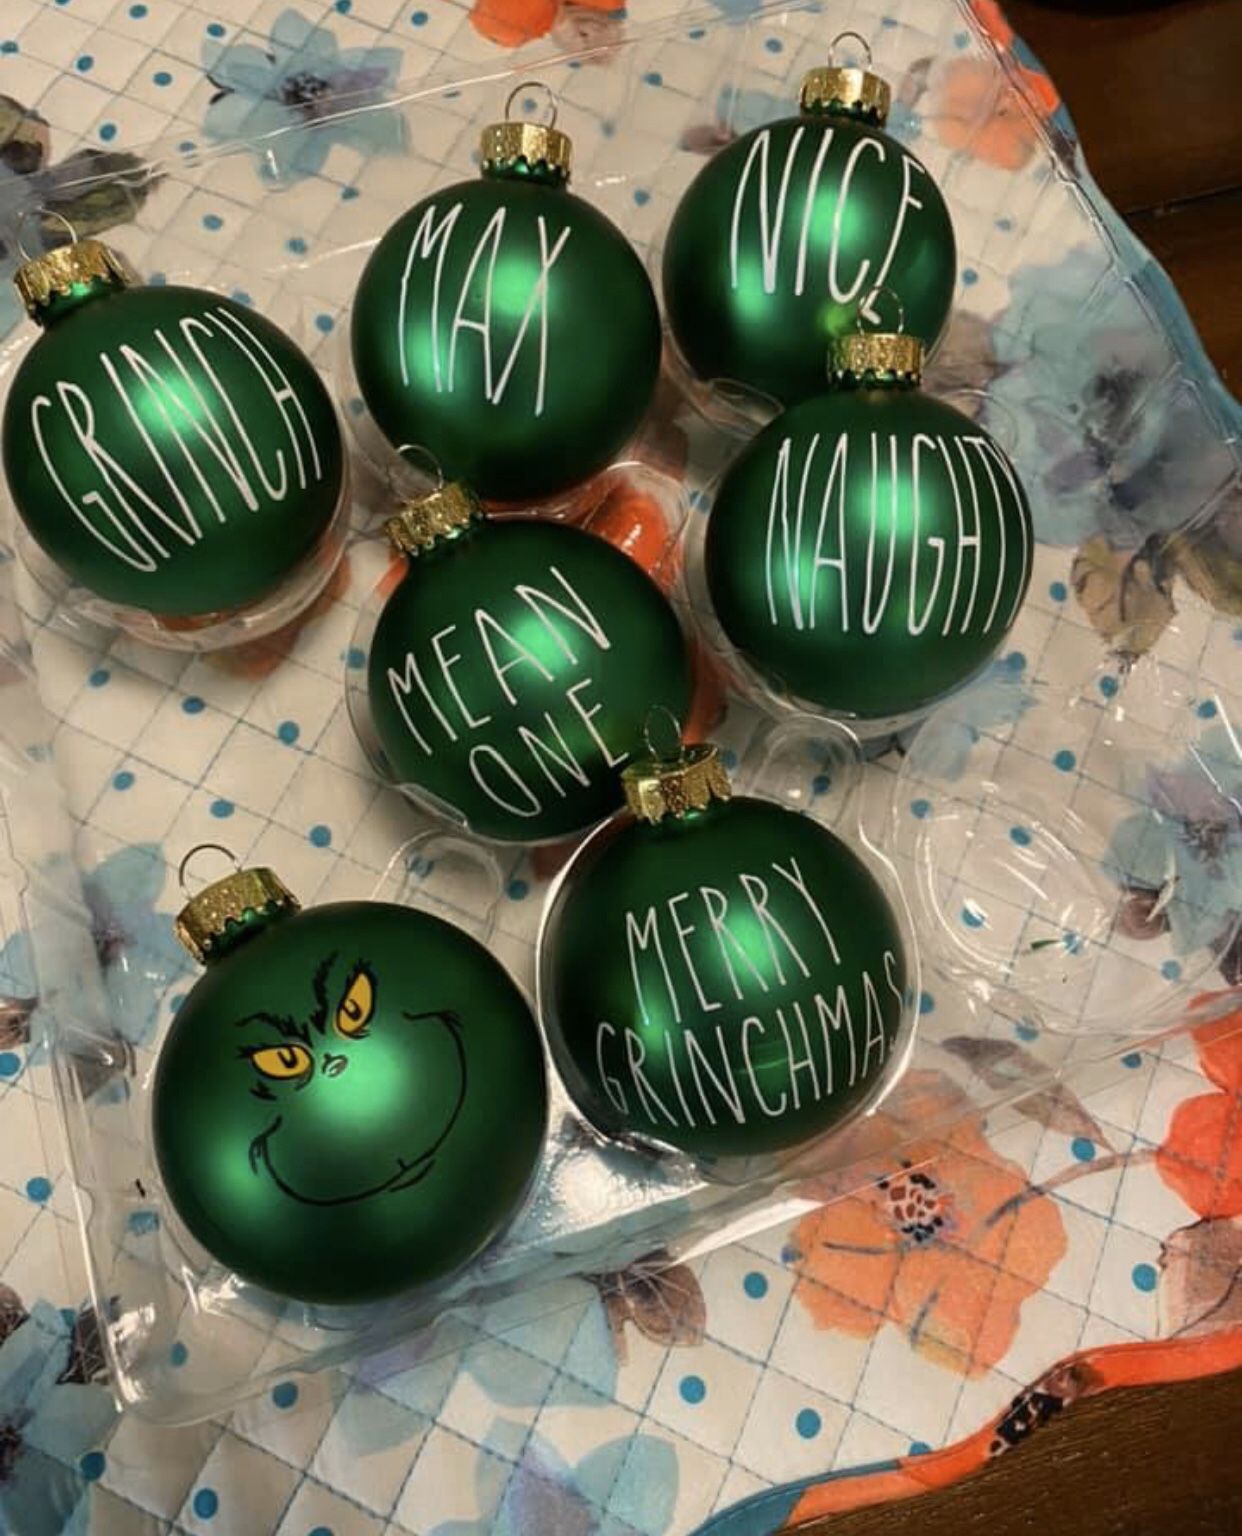 Grinch ornament set